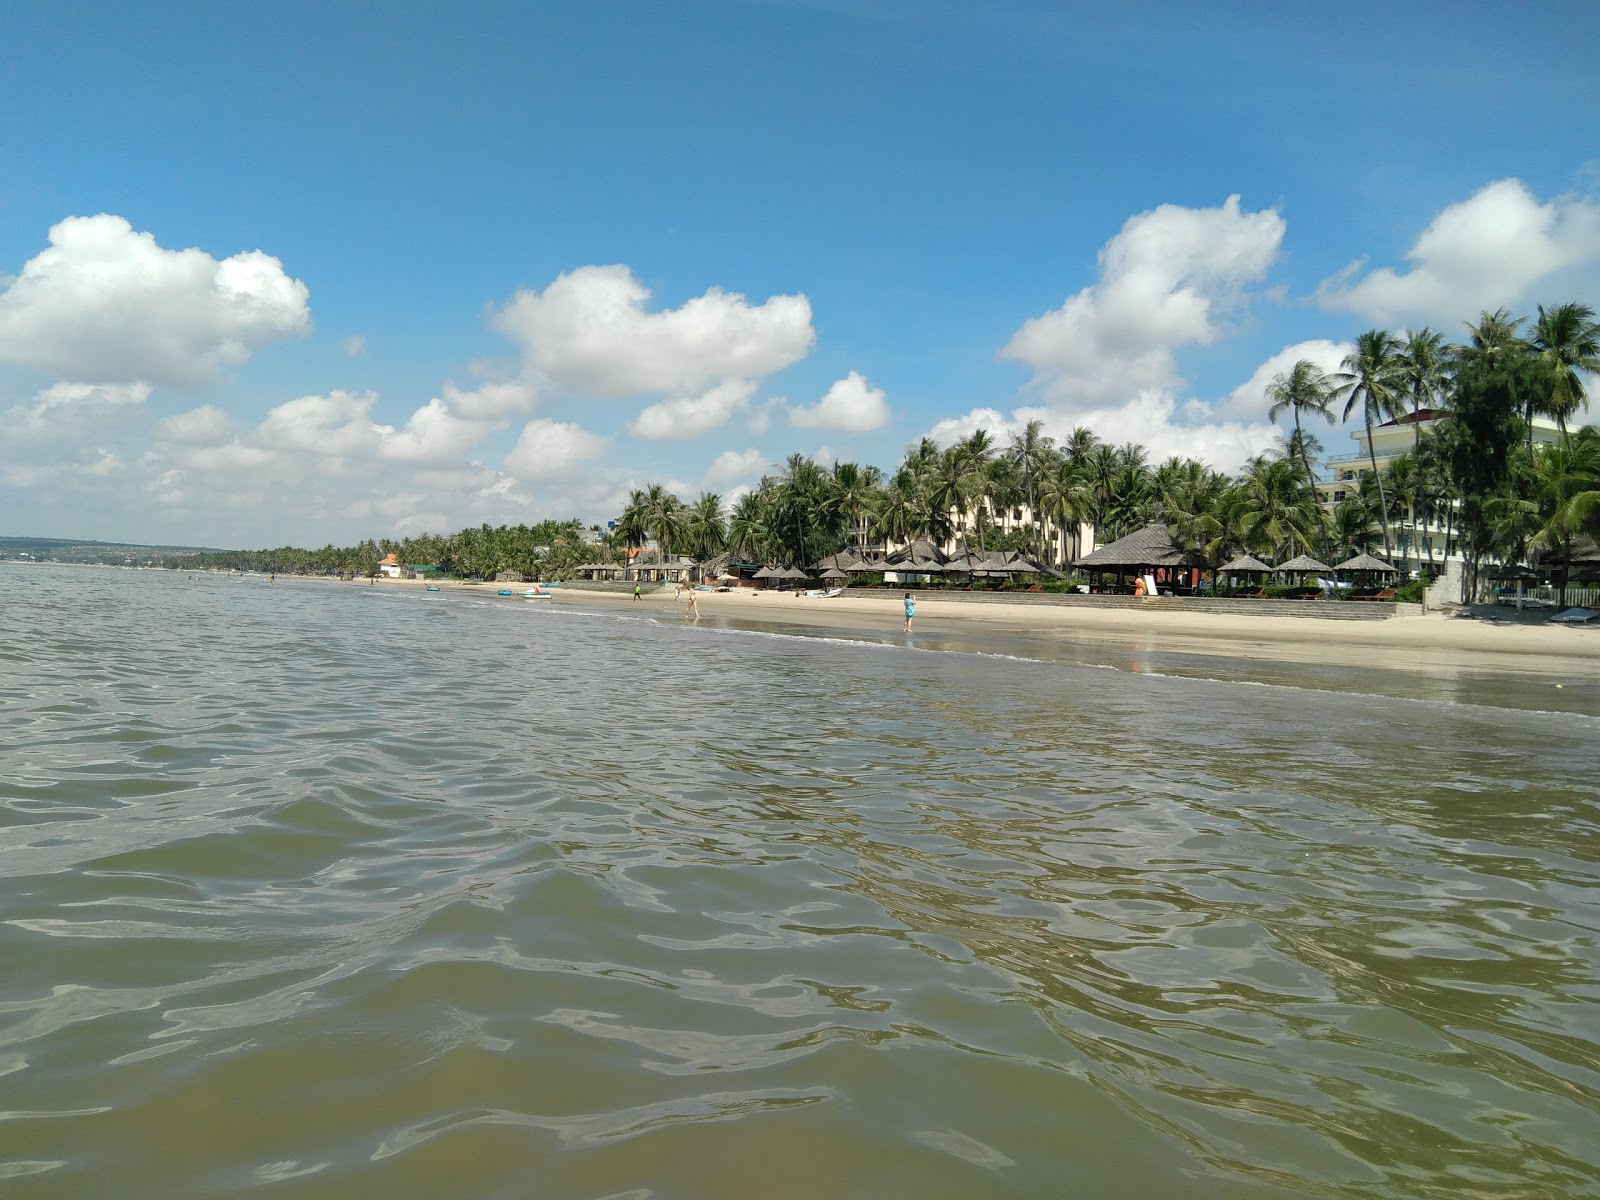 Valokuva Huynh Thuc Khang Beachista. ja asutus